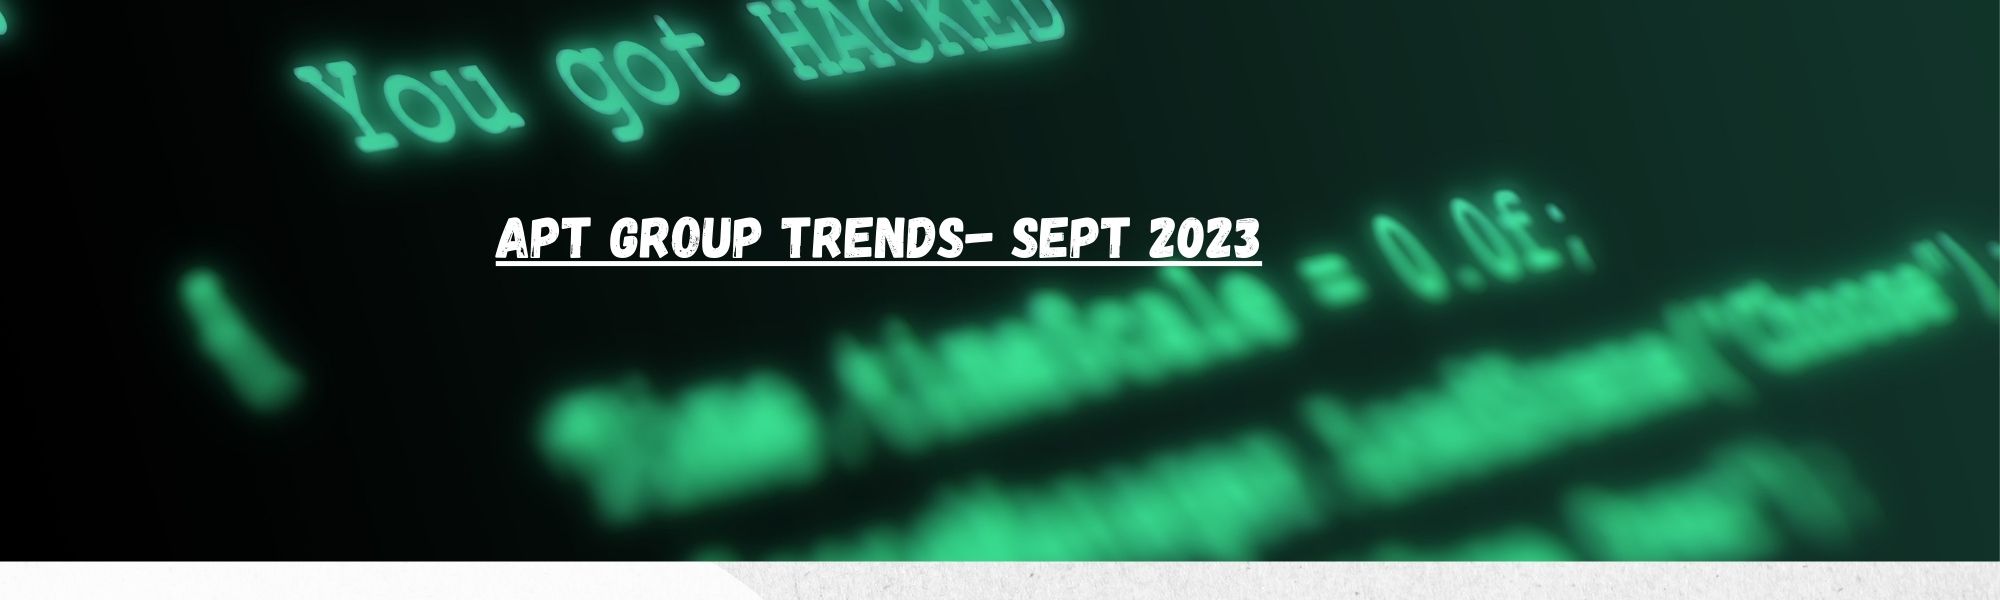 apt group trends sept23